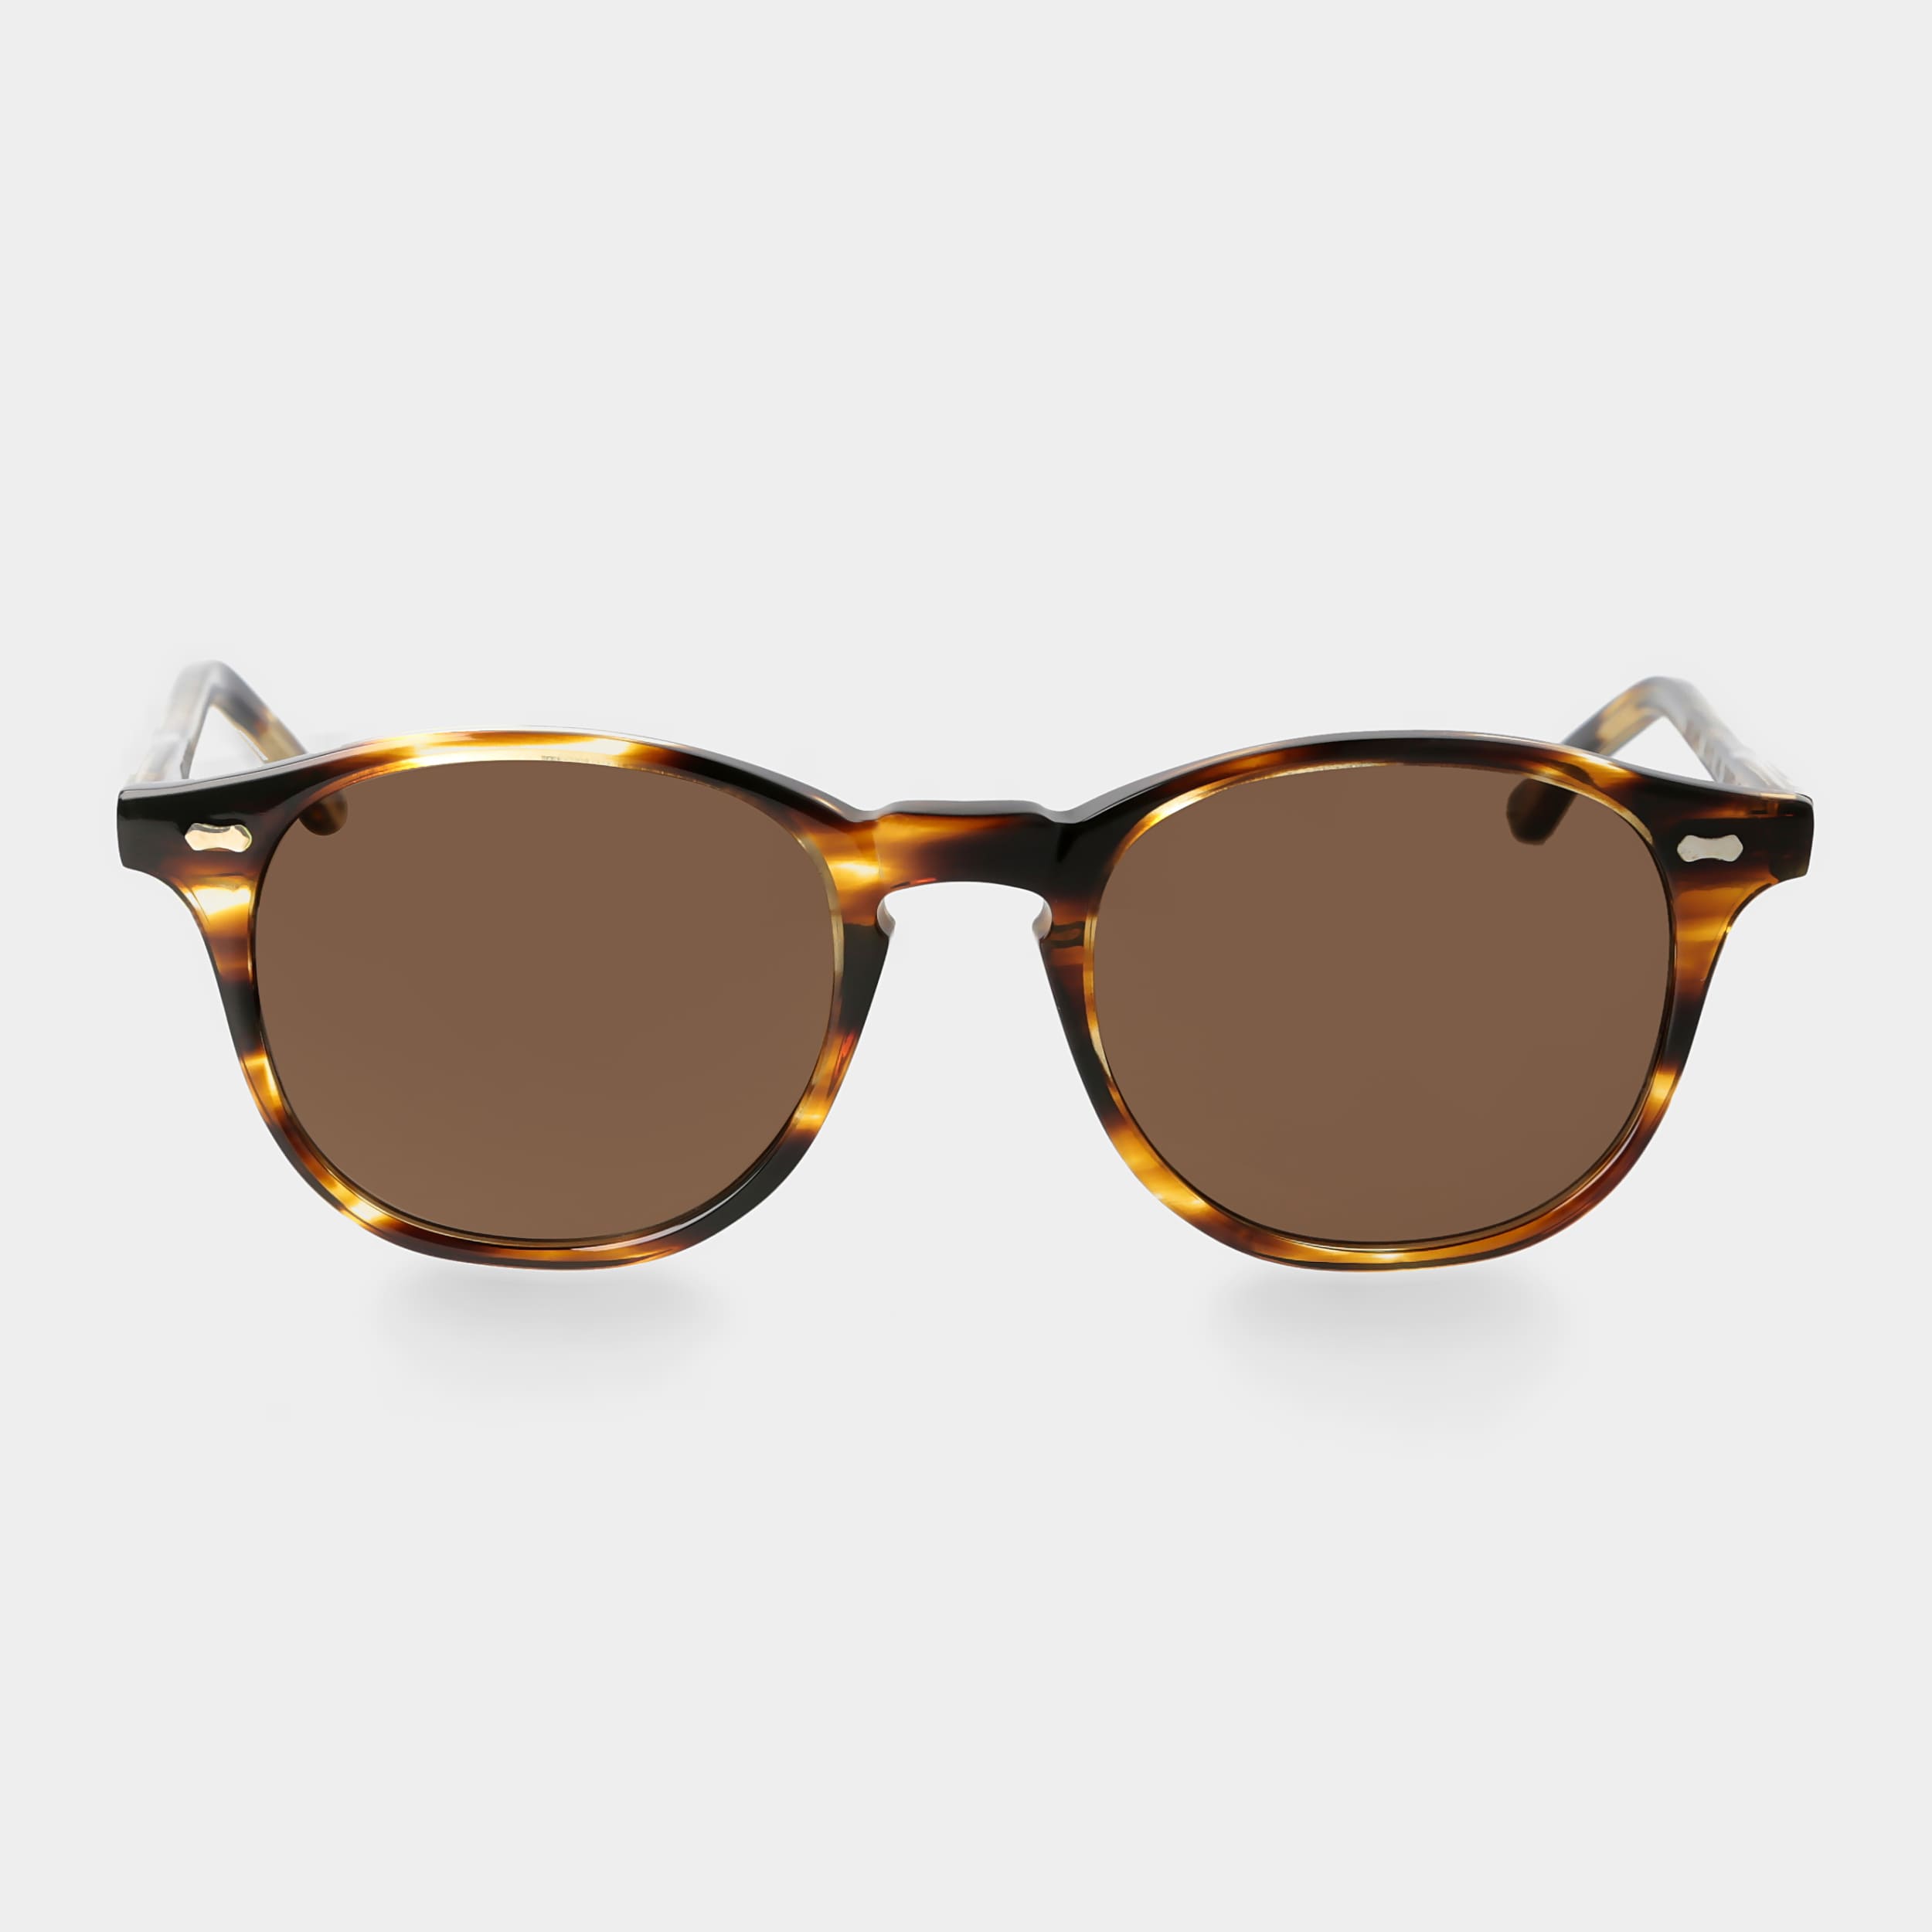 Sunglasses with Brown Lenses, handmade Italy Eyewear in | TBD